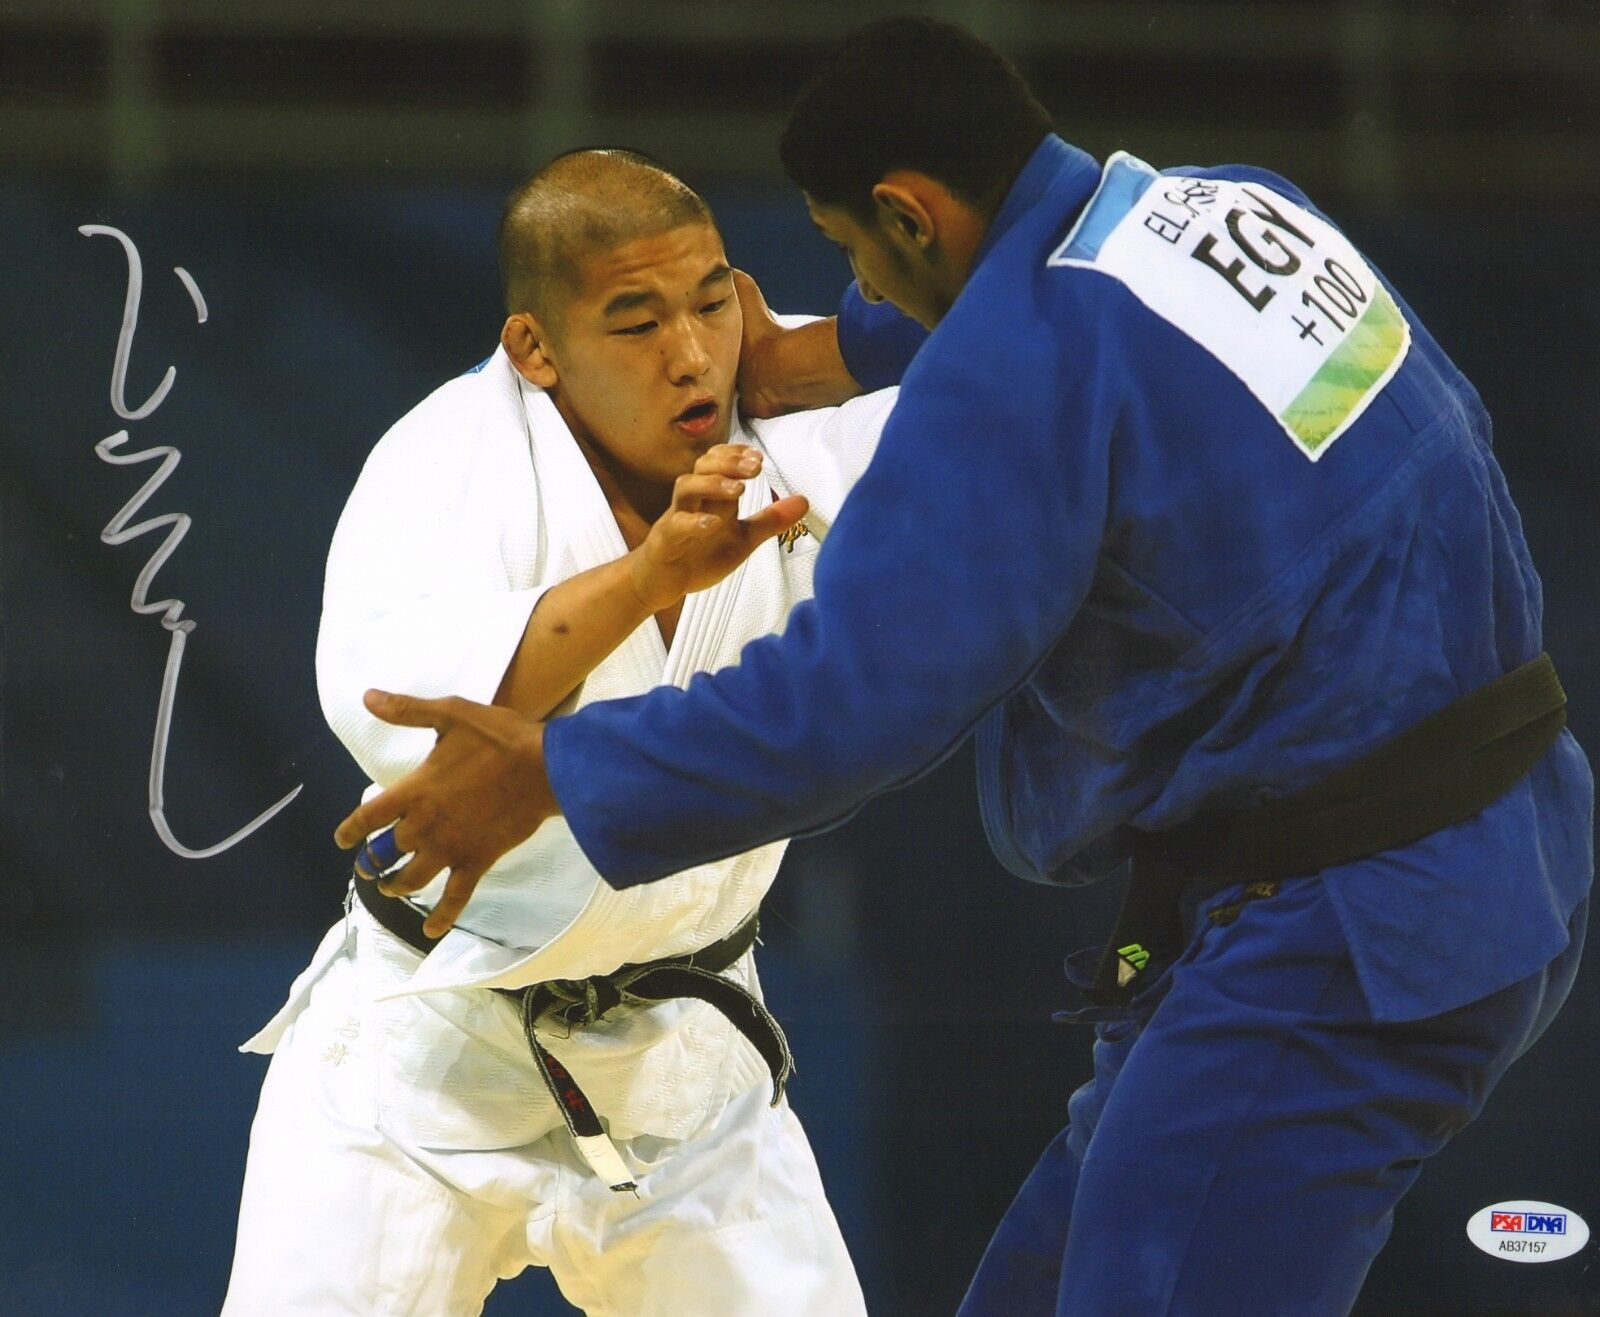 Satoshi Ishii Signed 11x14 Photo Poster painting PSA/DNA 2008 Olympic Gold Medal Judo MMA IGF 4